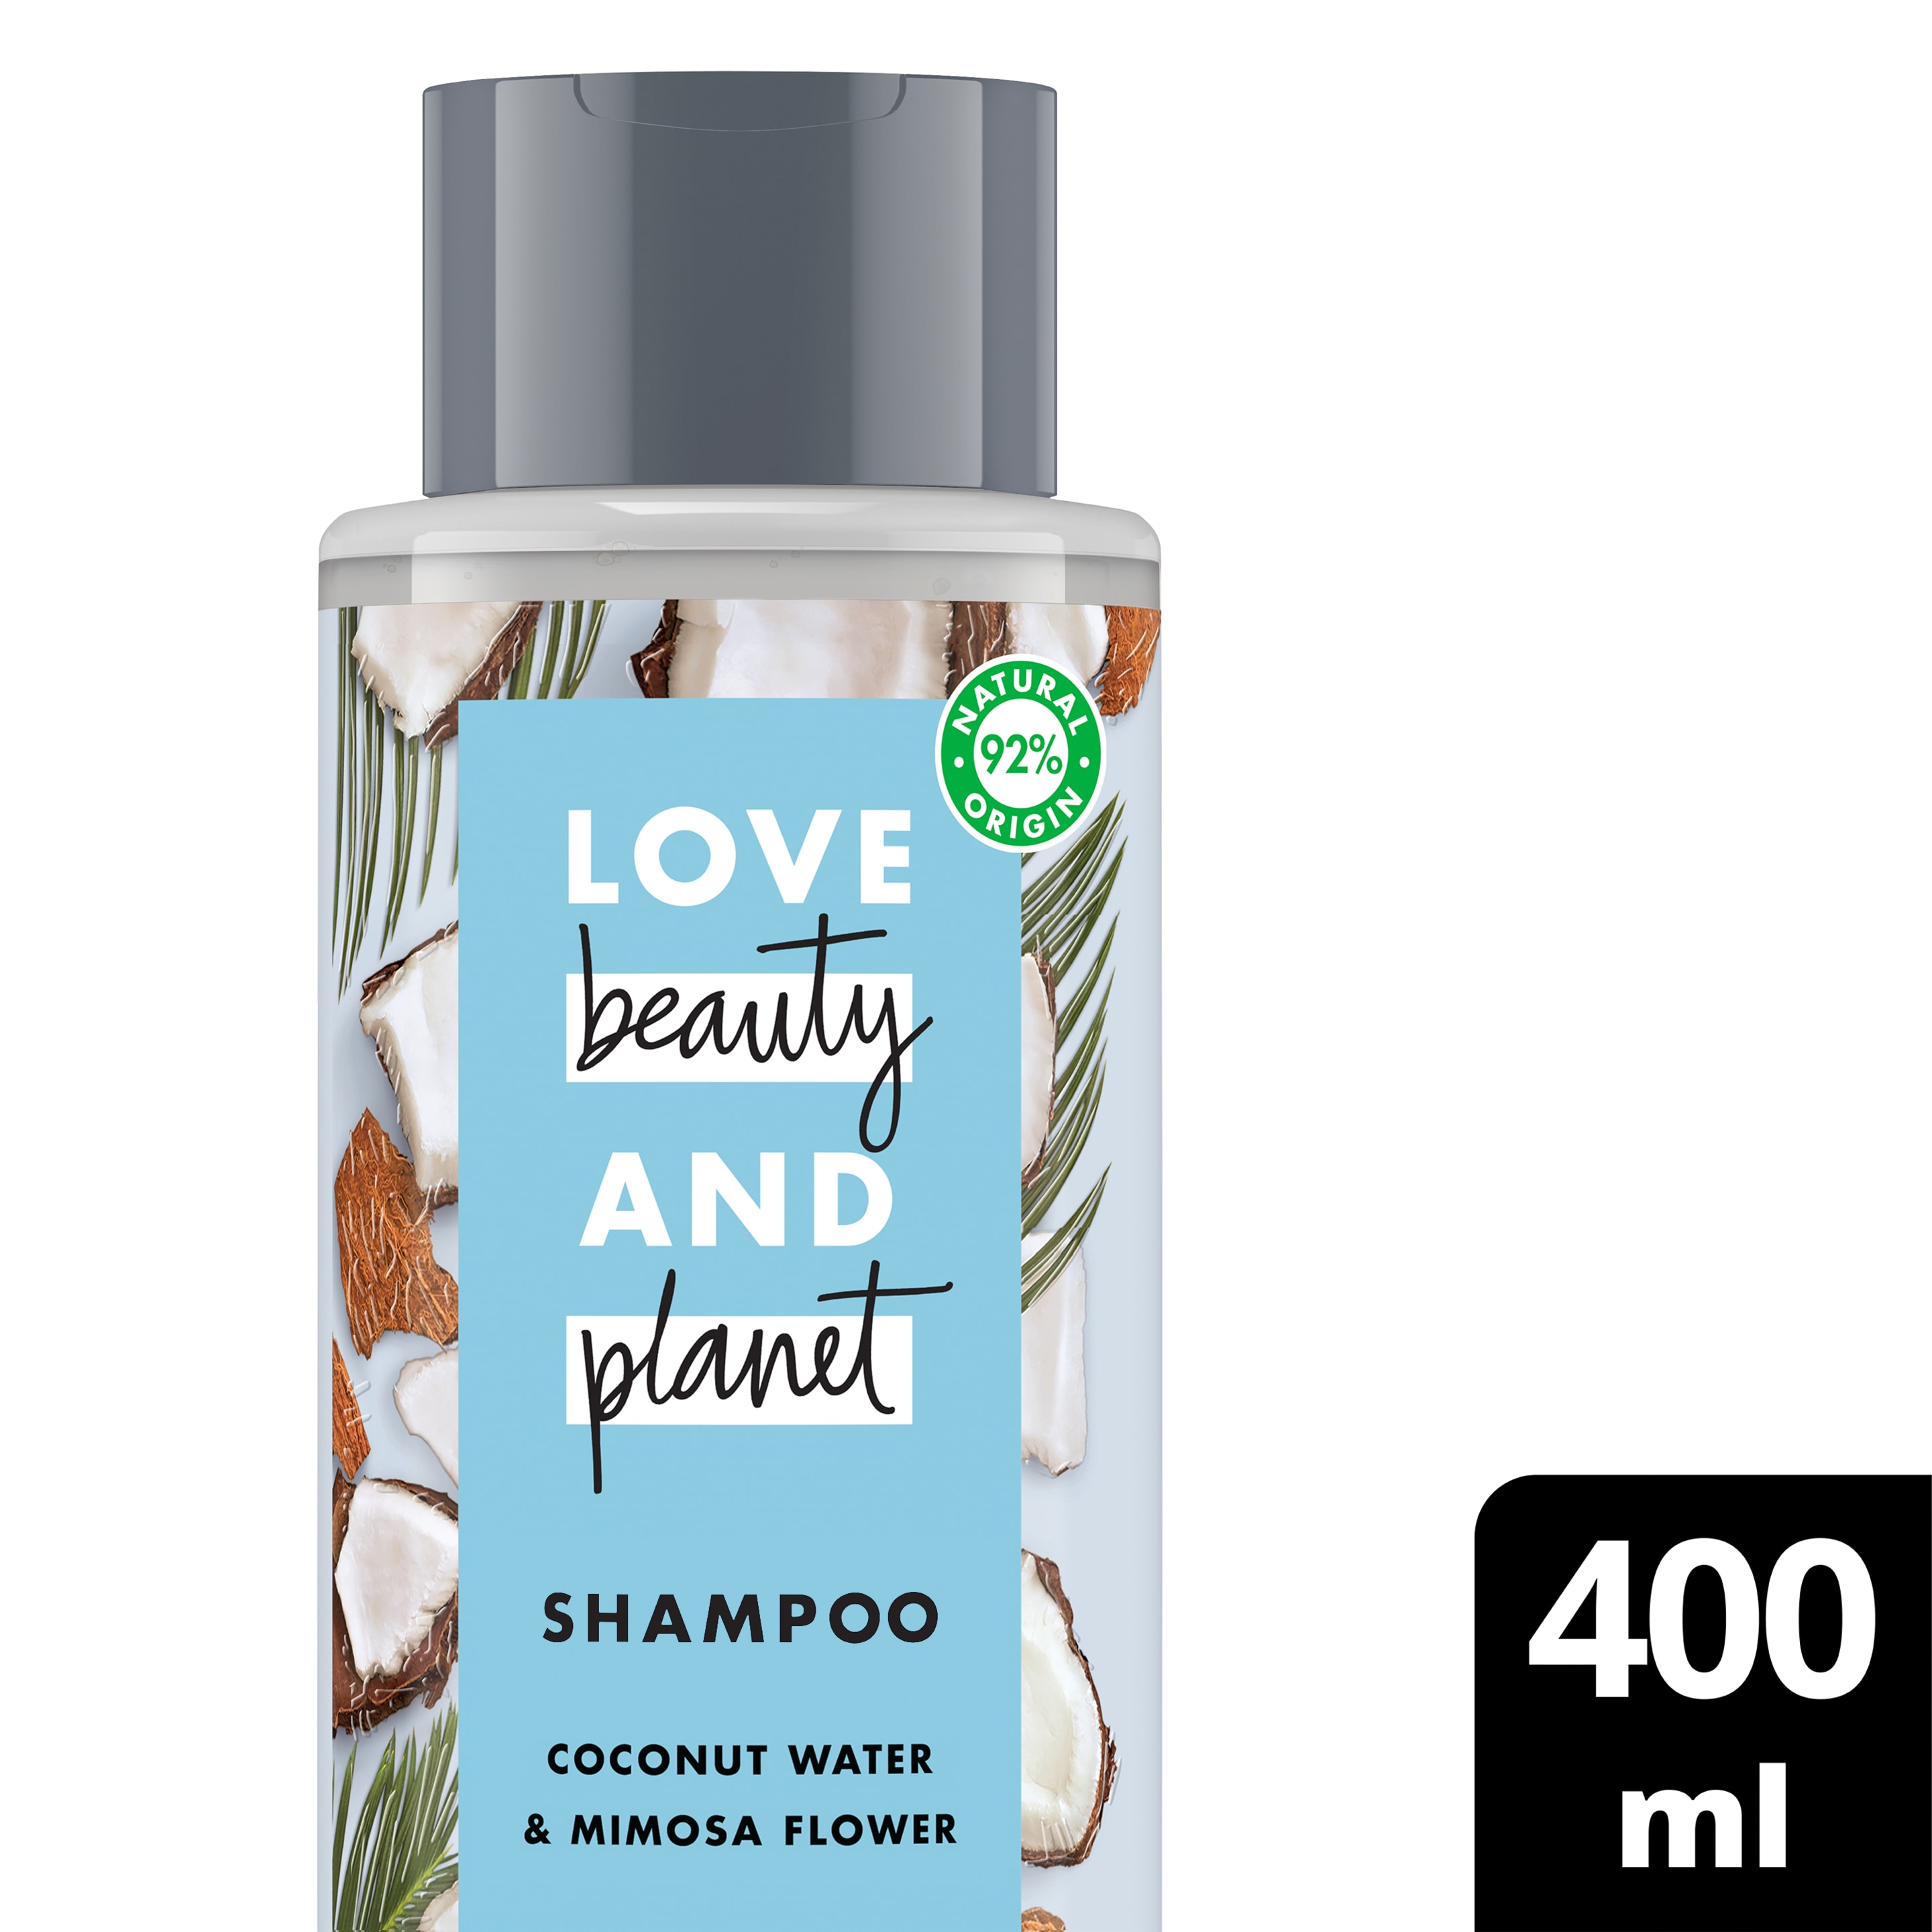 coconut water & mimosa flower shampoo